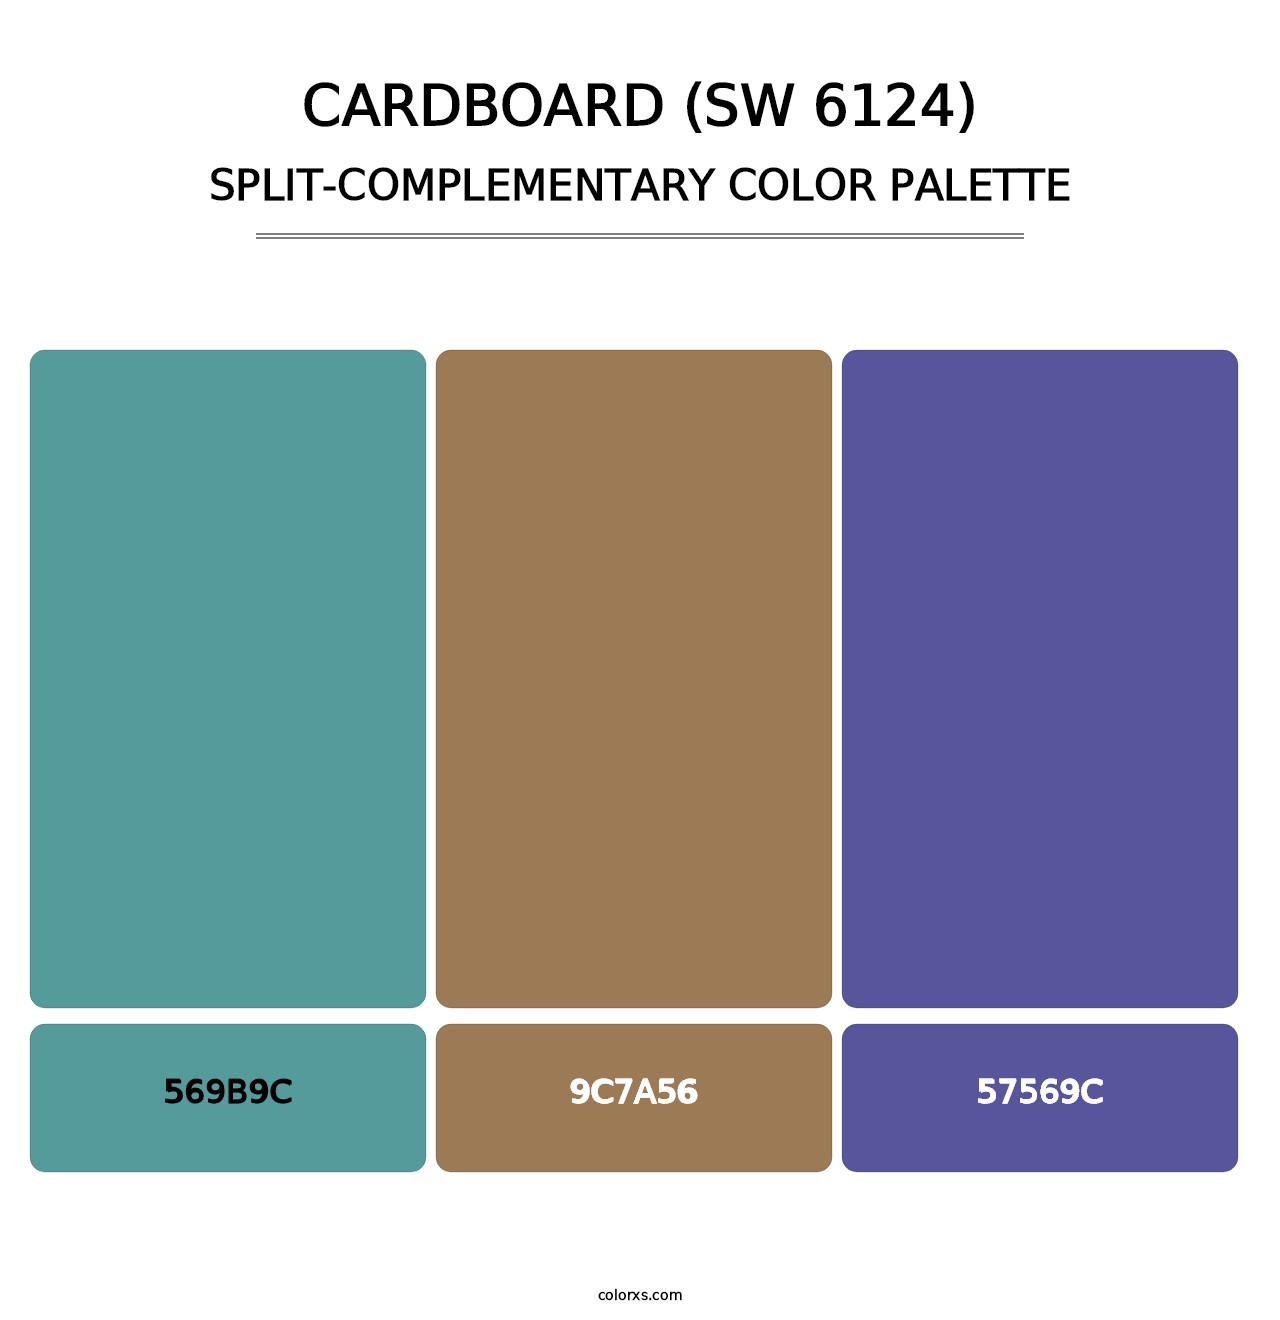 Cardboard (SW 6124) - Split-Complementary Color Palette